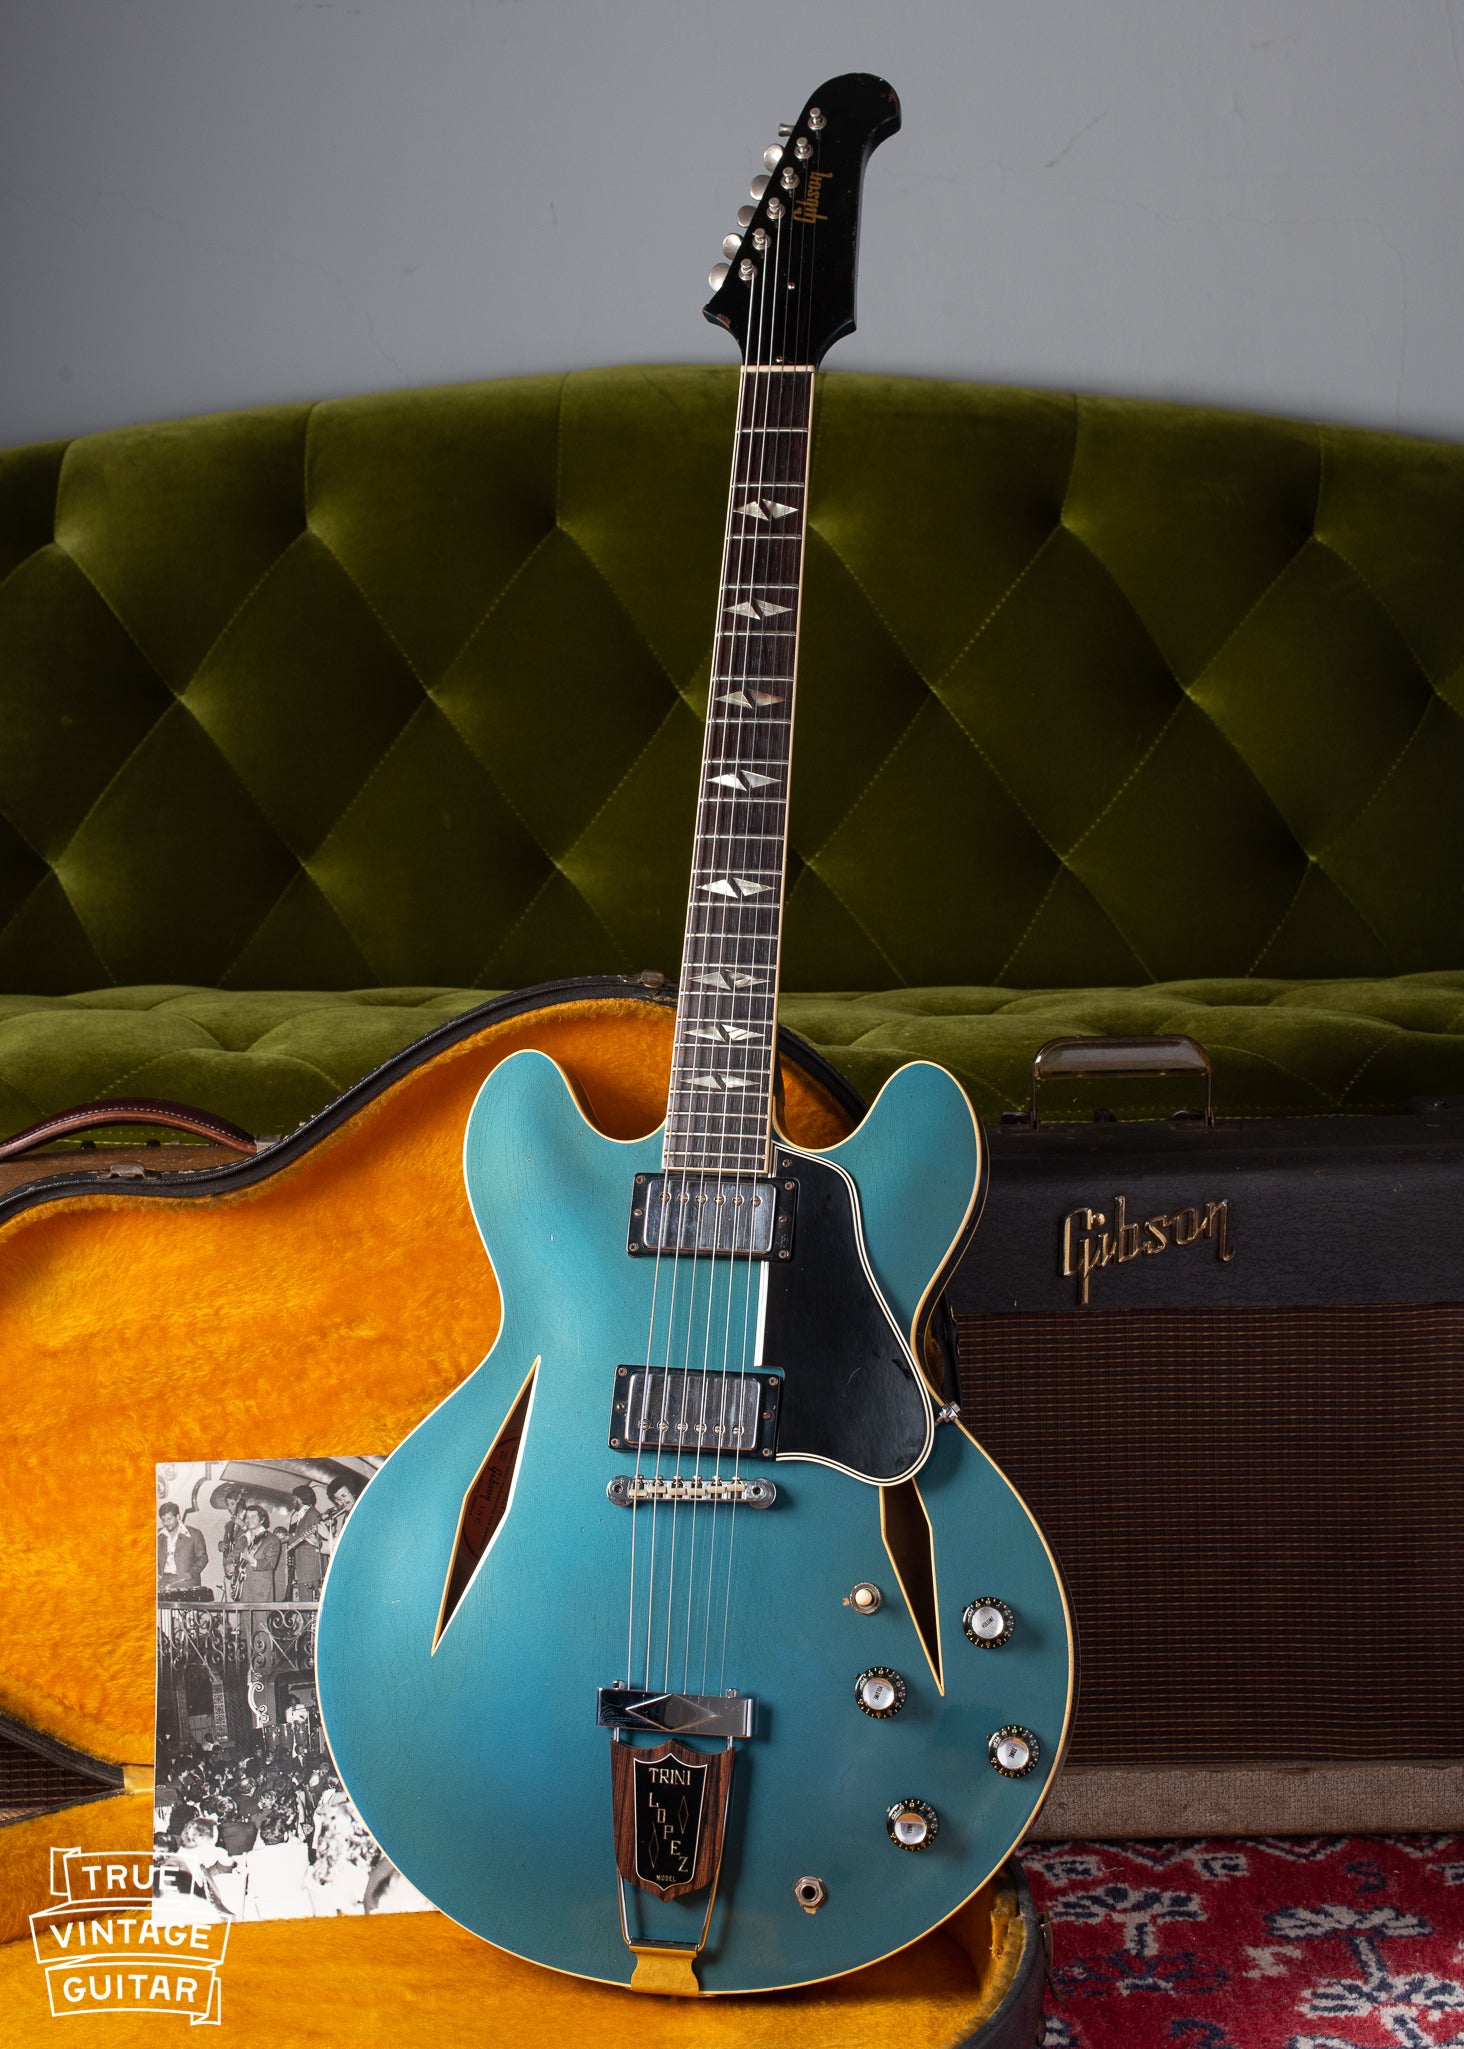 Gibson Trini Lopez 1966 guitar with Pelham Blue metallic finish